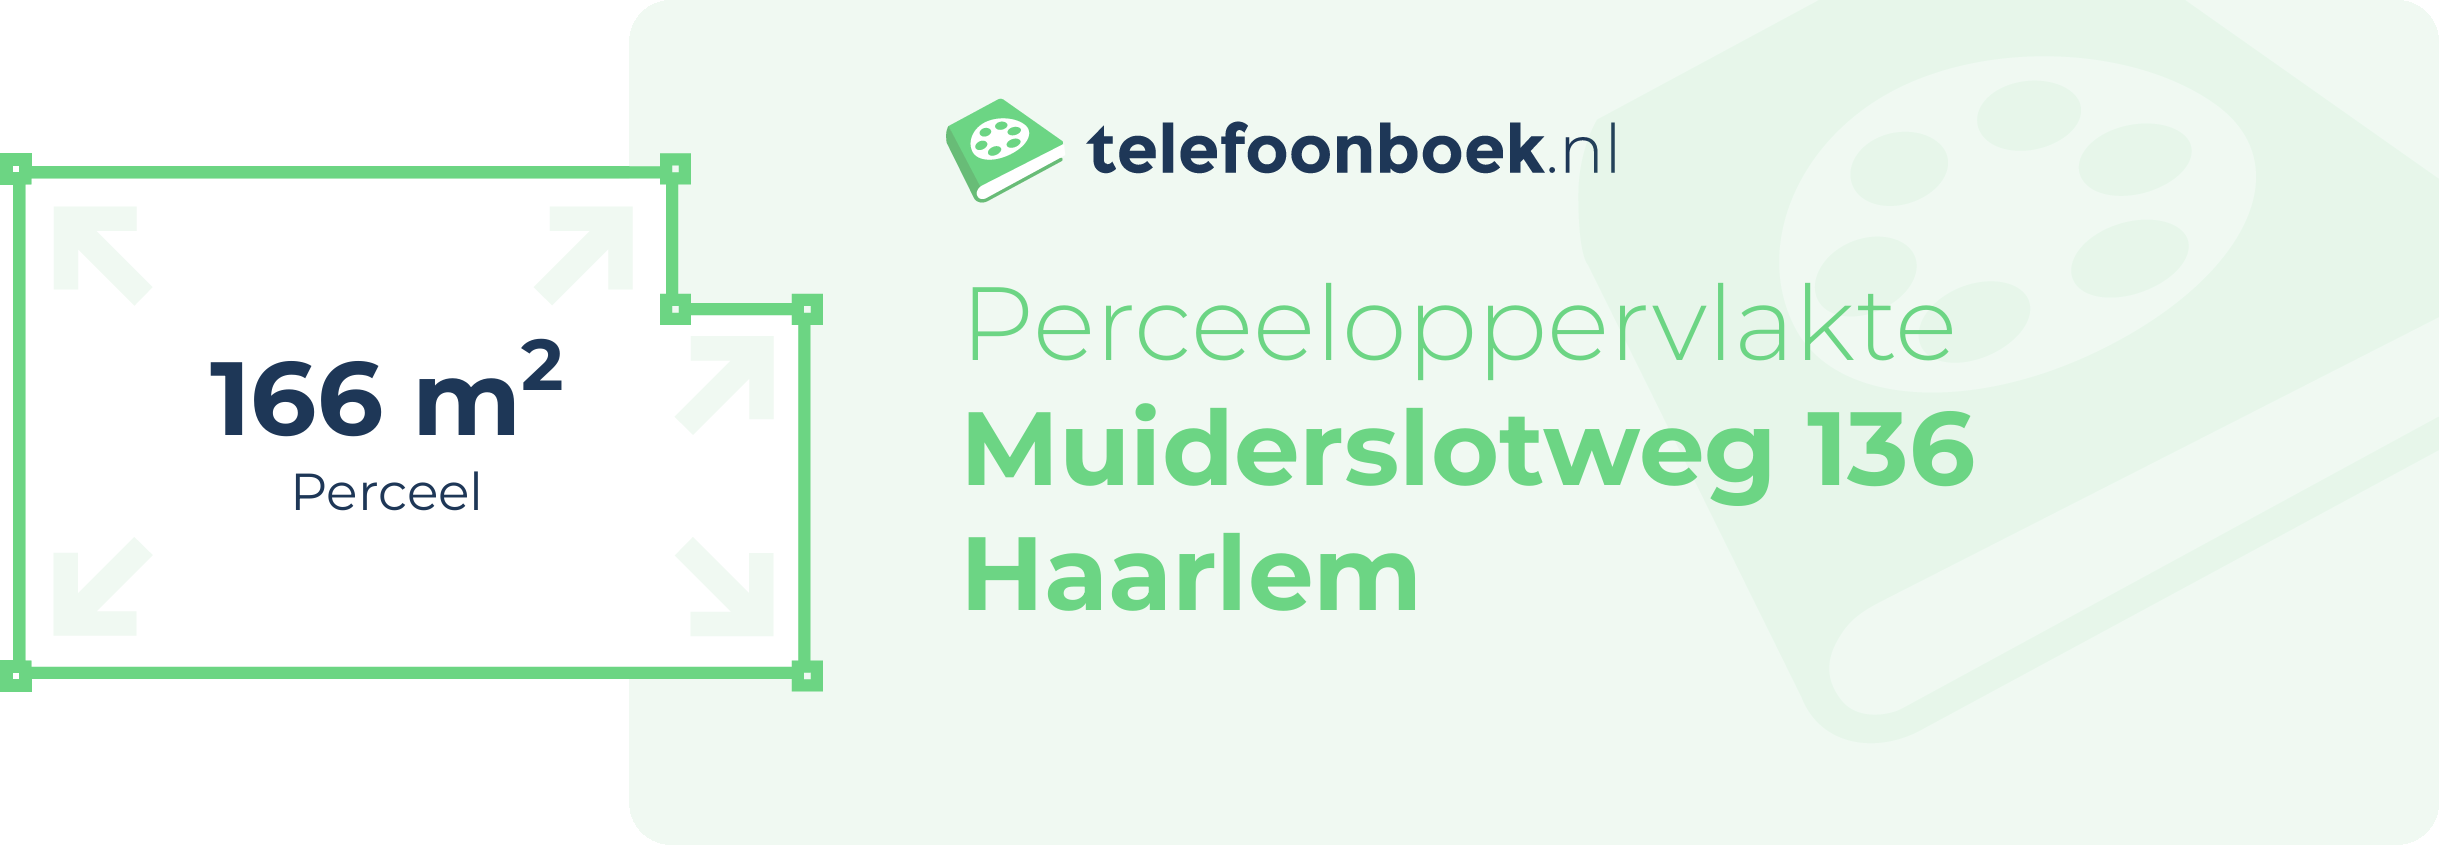 Perceeloppervlakte Muiderslotweg 136 Haarlem